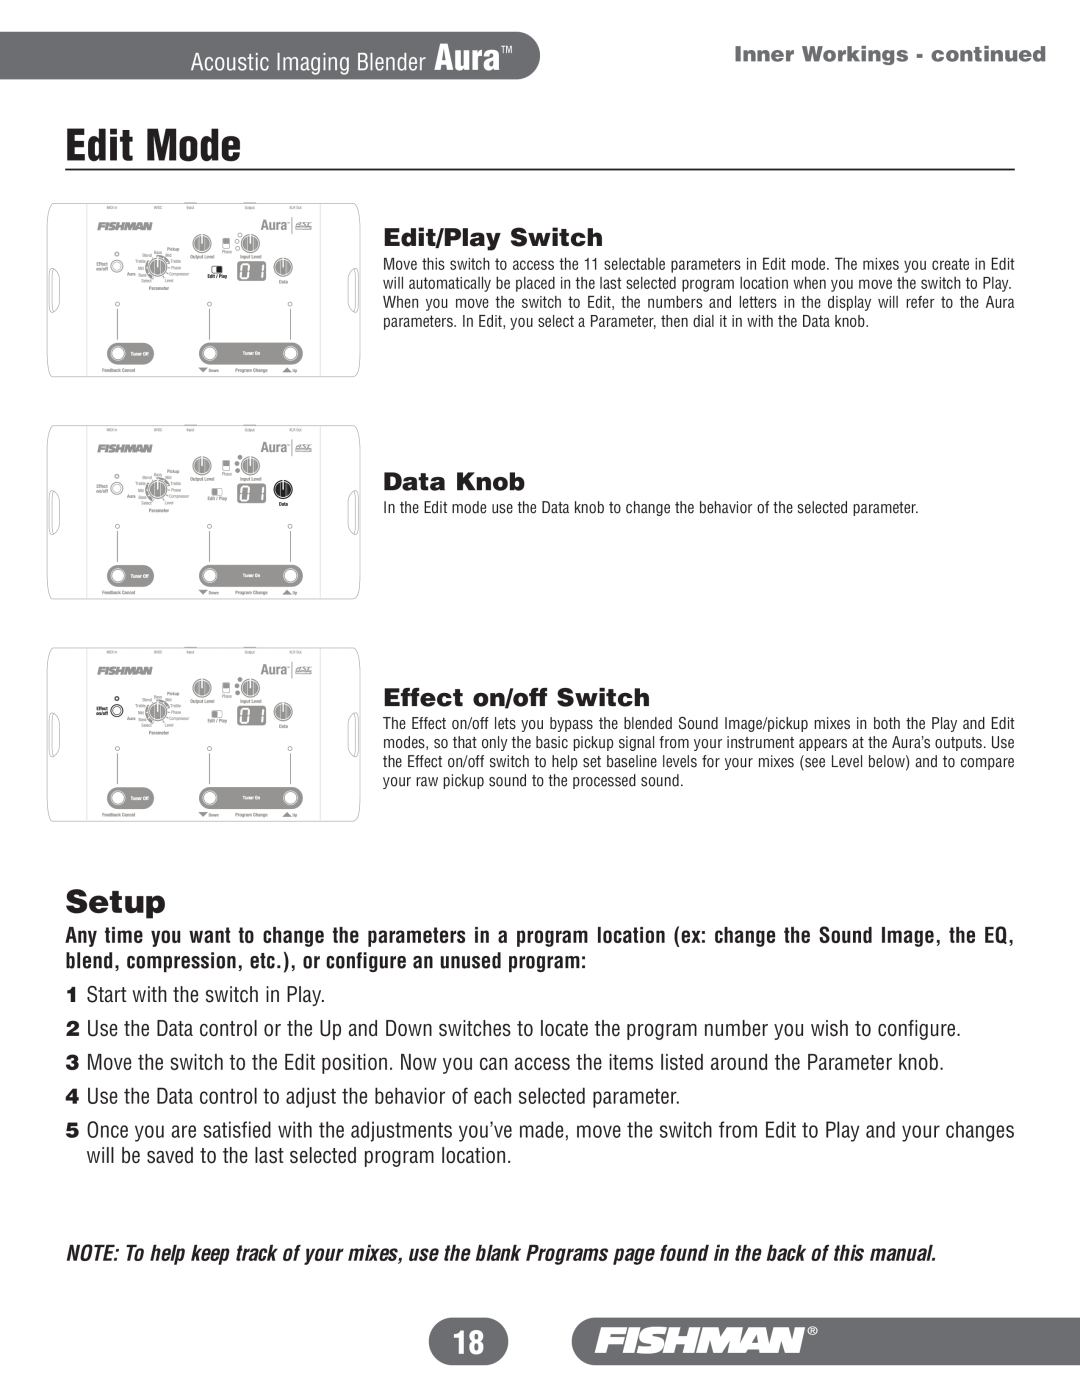 Fishman manual Edit Mode, Setup, Data Knob, Edit/Play Switch, Effect on/off Switch, Acoustic Imaging Blender Aura 